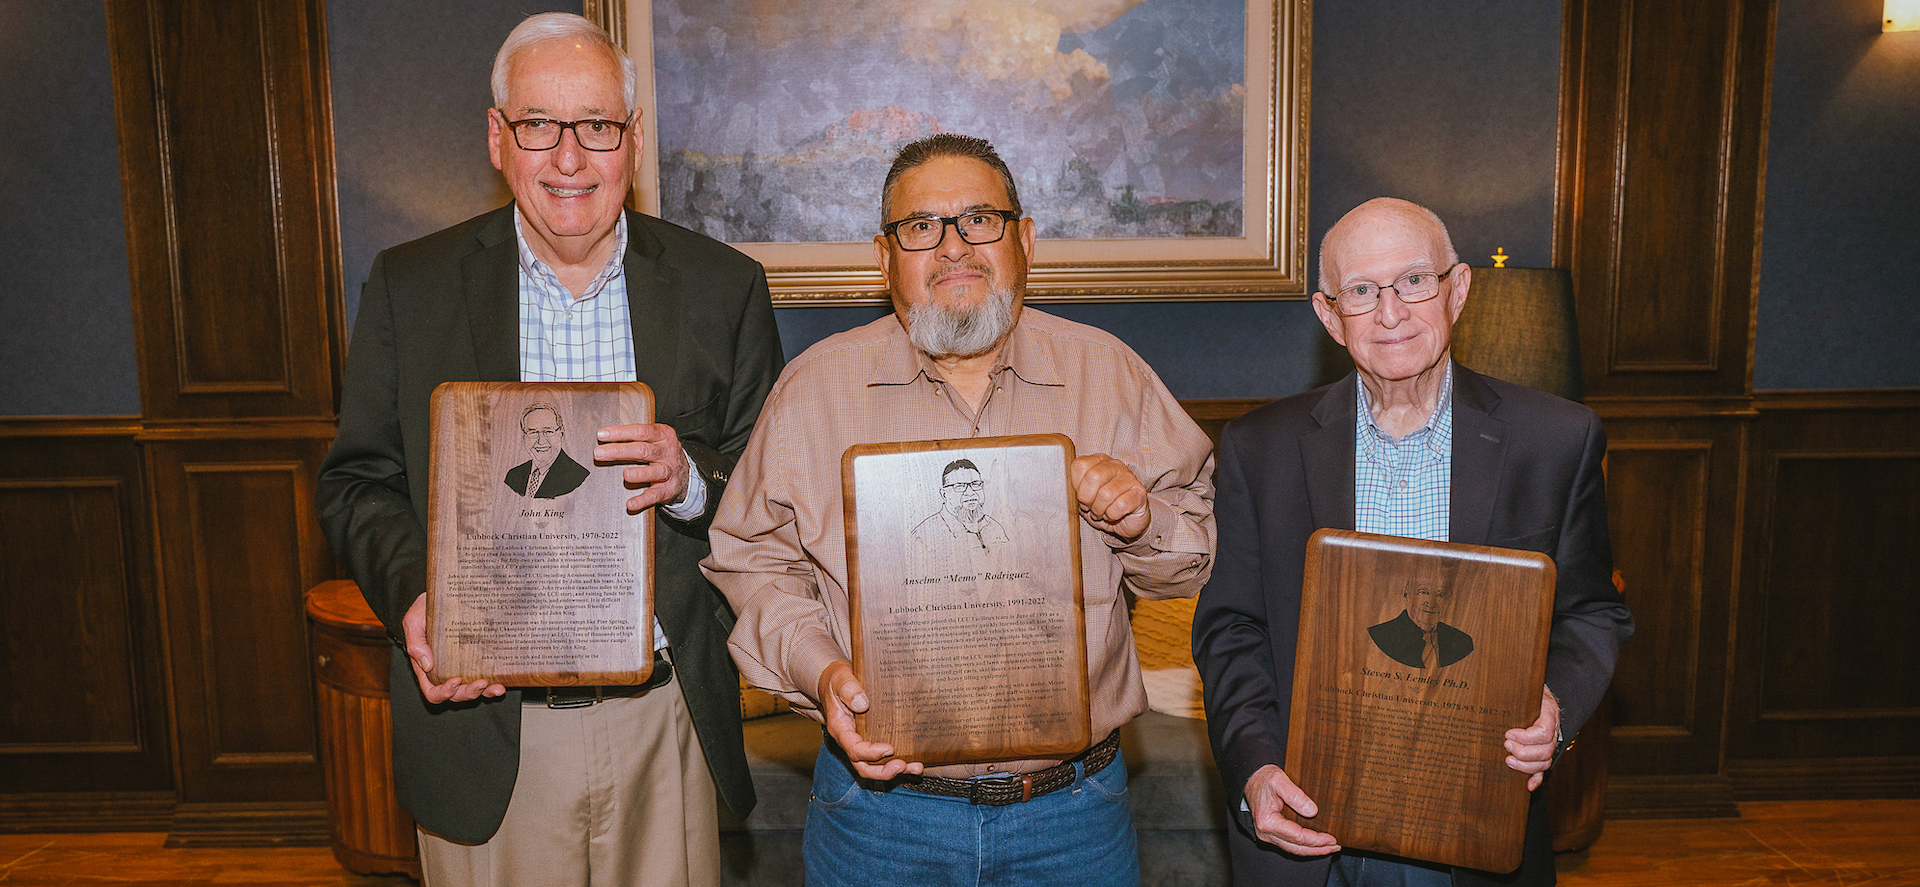 John King, "Memo", and Steven Lemley holding their retirement plaques